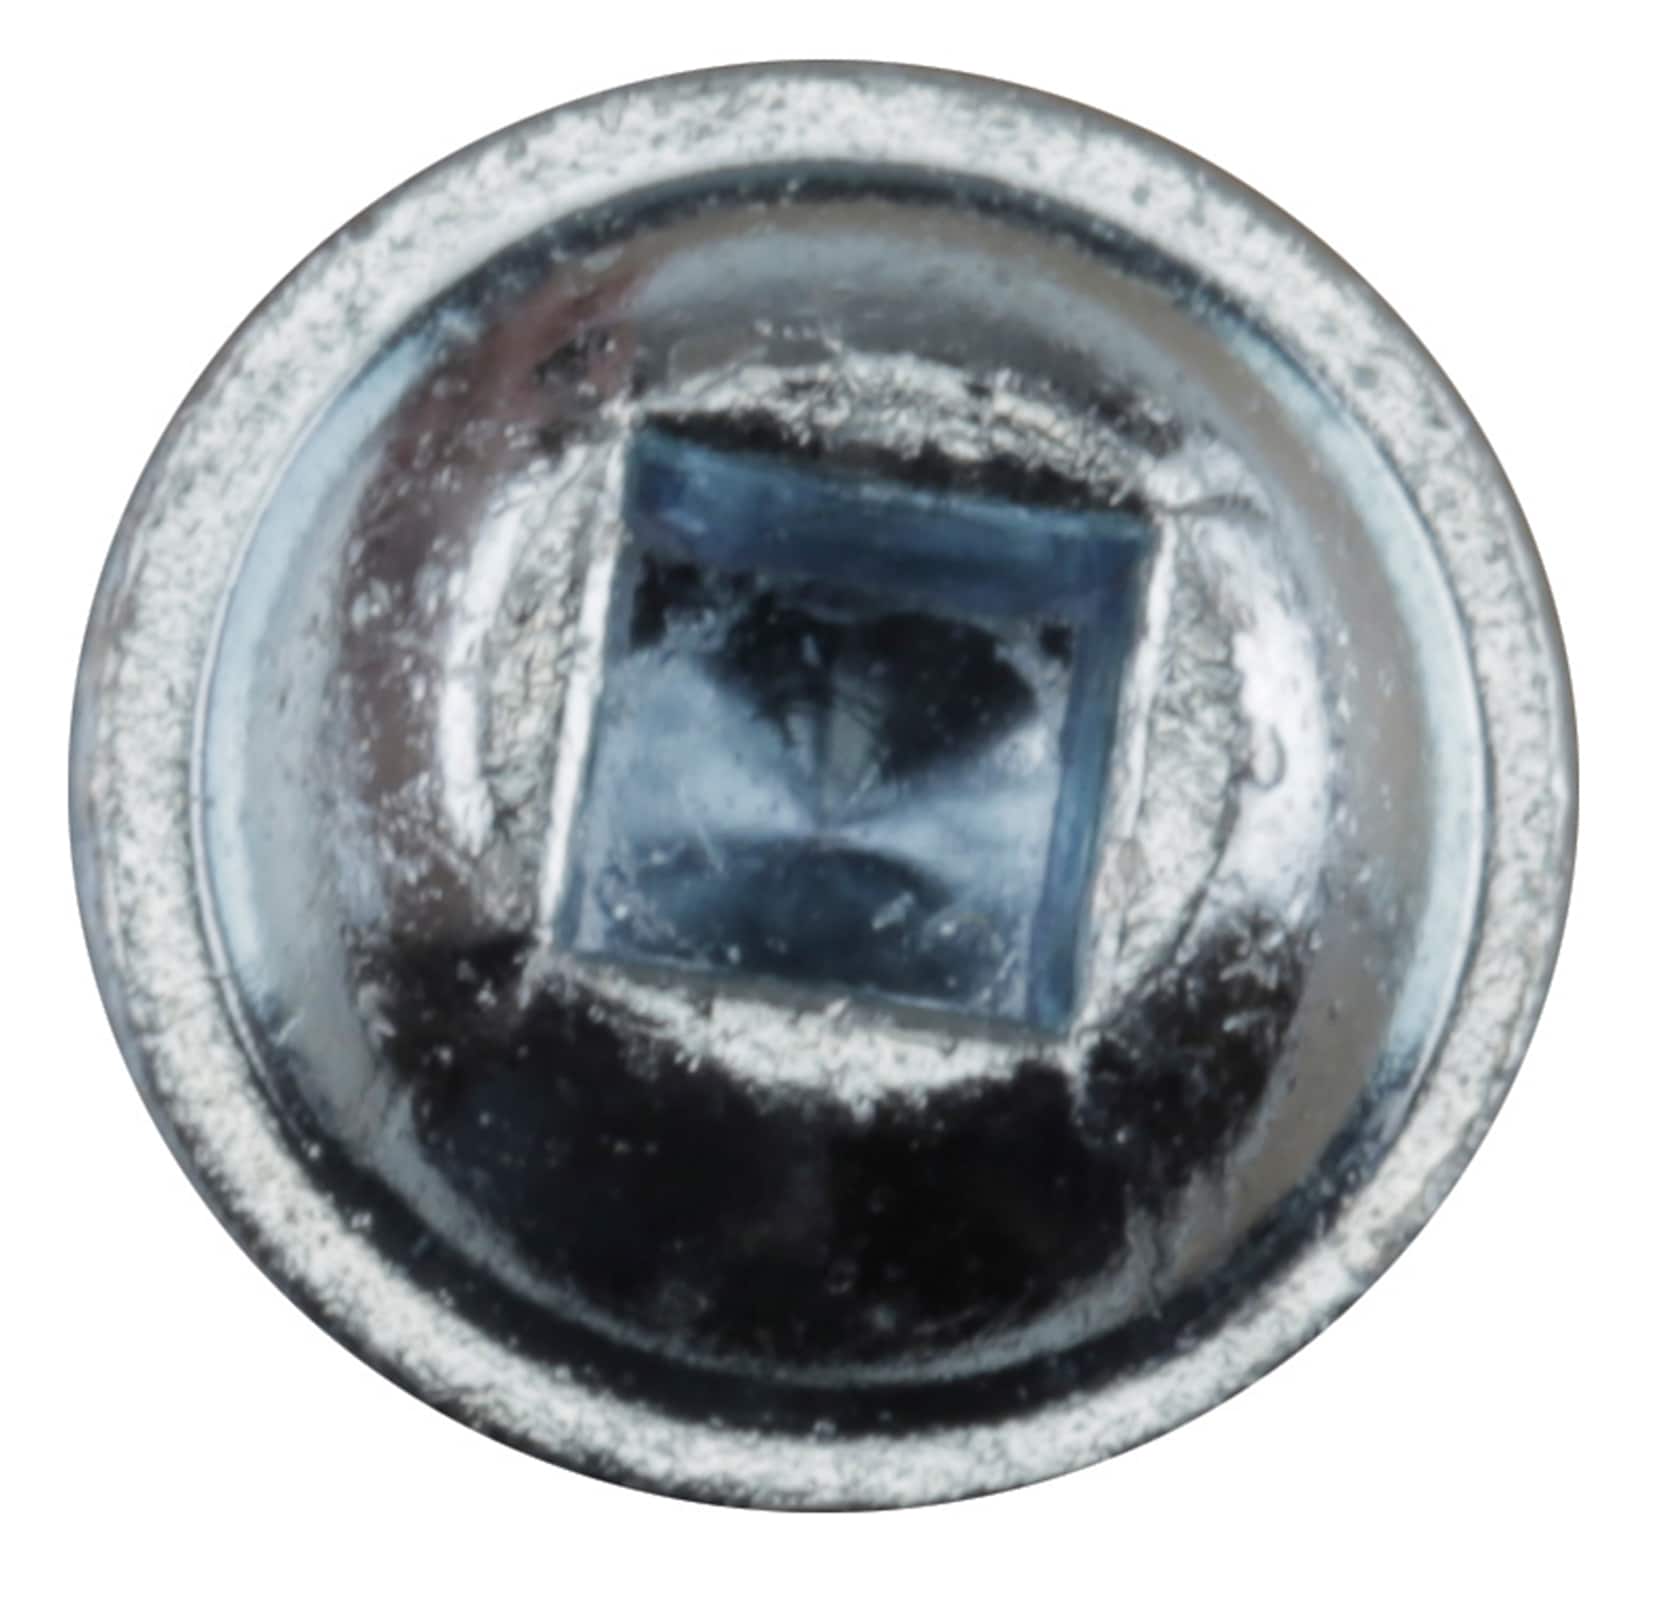 Kreg #2 x 2 1/2-in Zinc-Plated Washer-Head Square-Drive Pocket